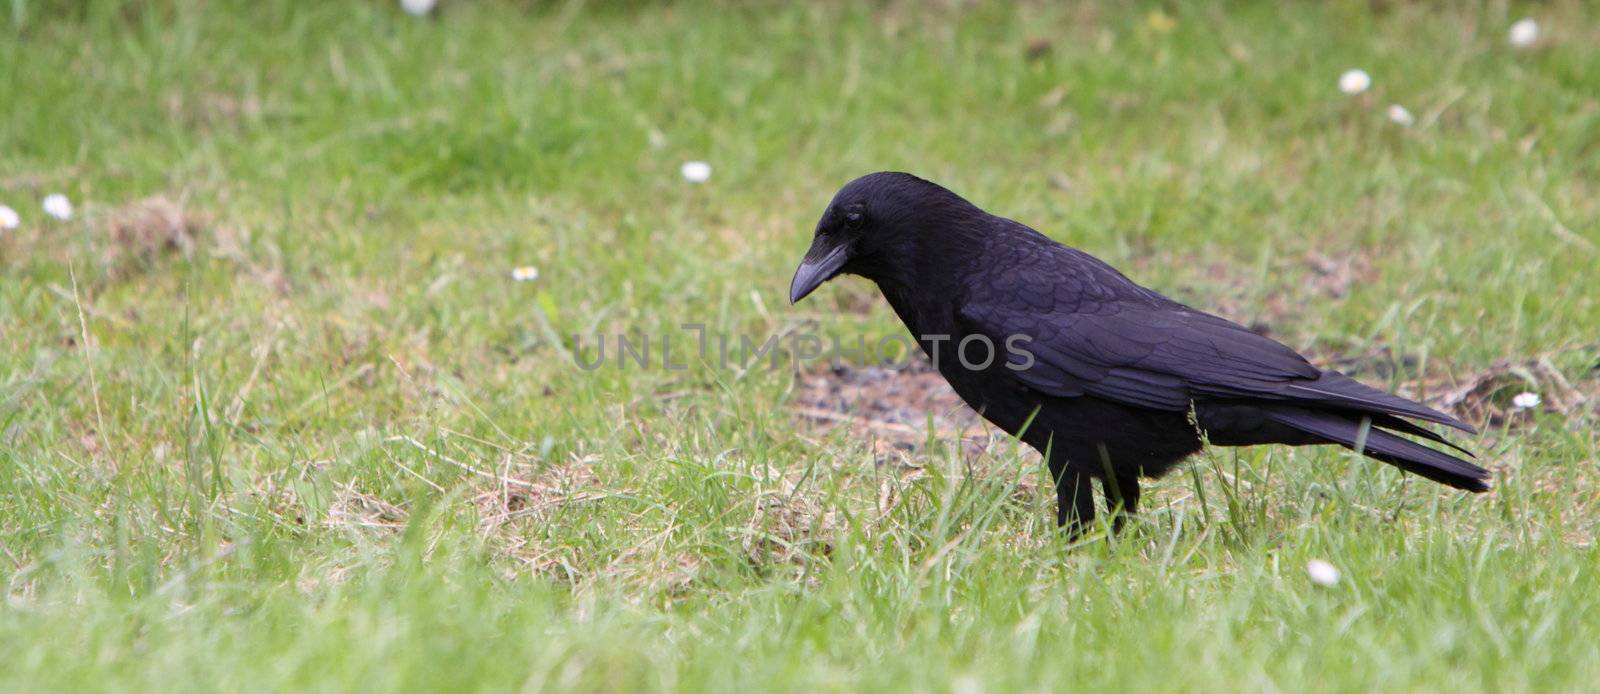 Crow  by mitzy